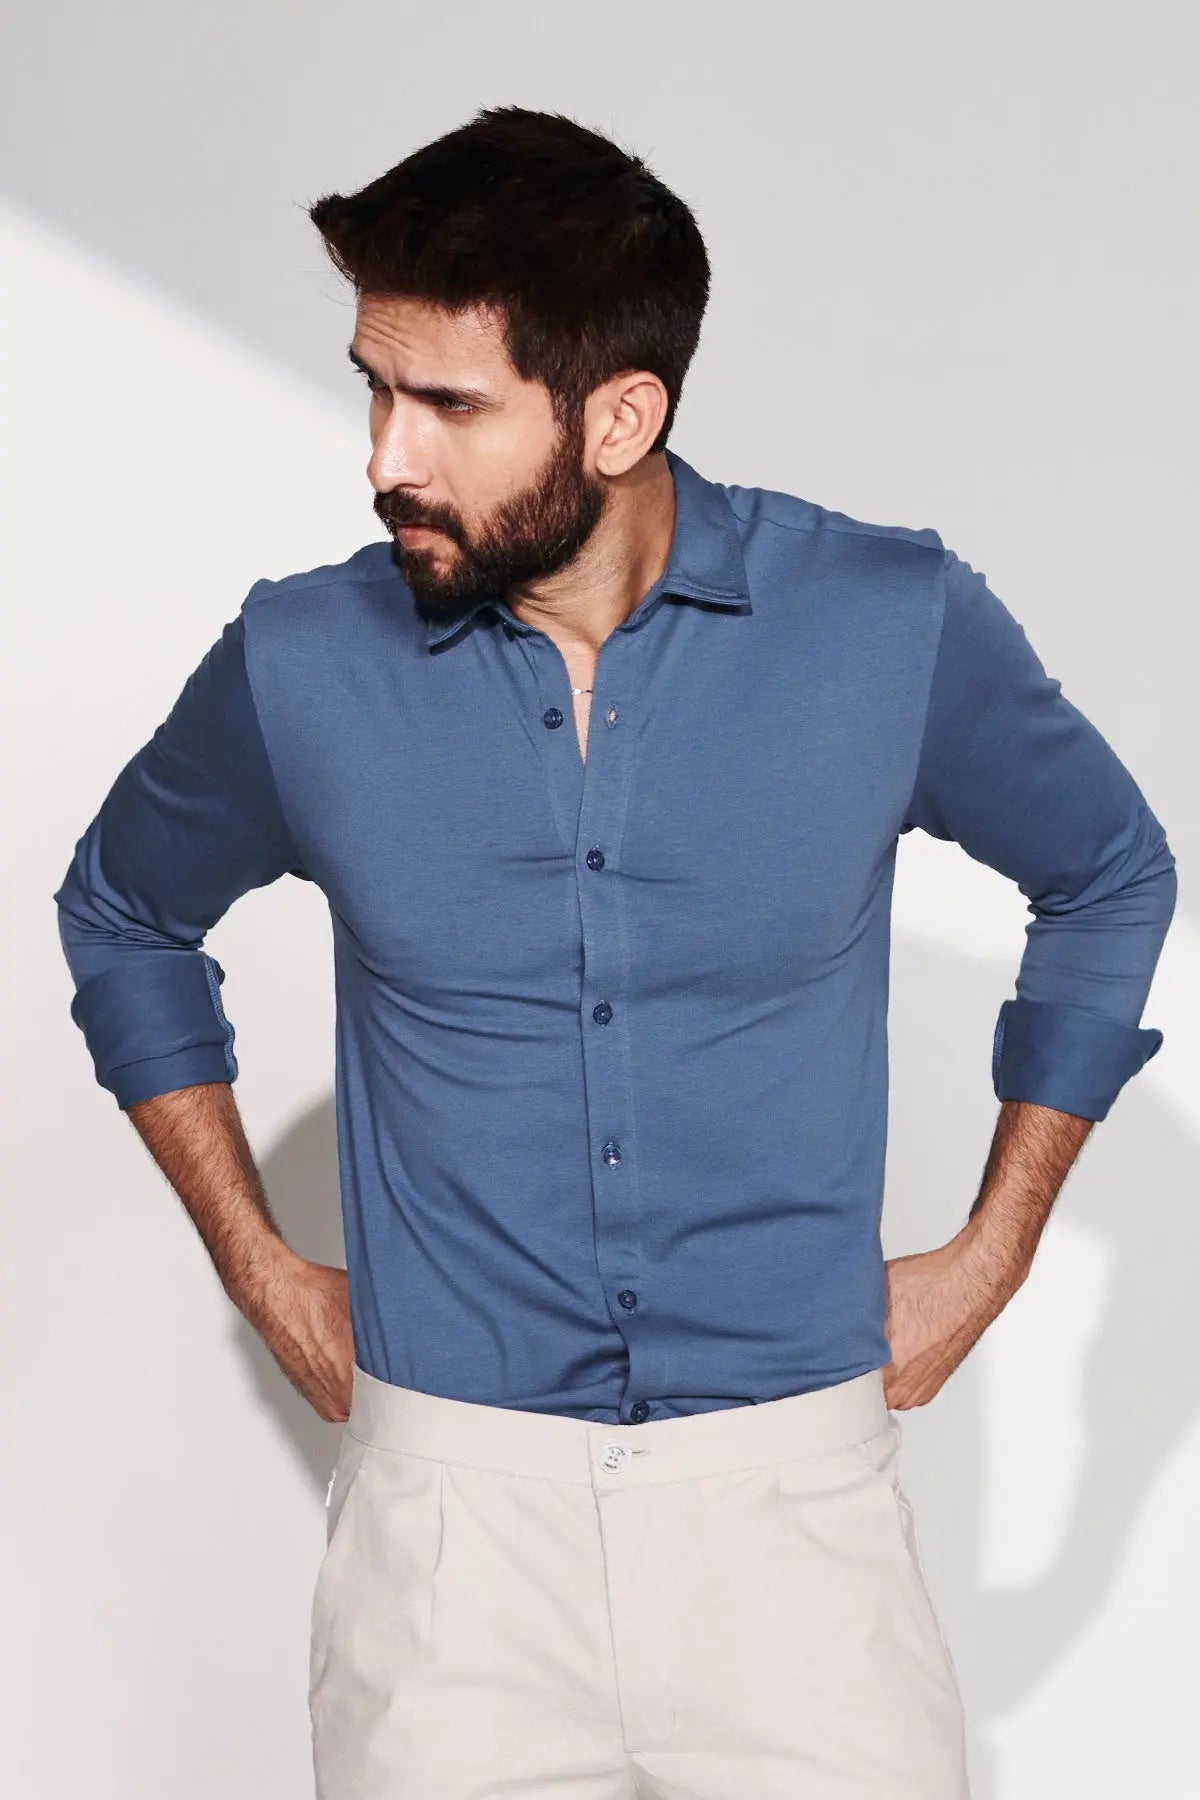 Buy Men's Casual Wear Online From BeYours